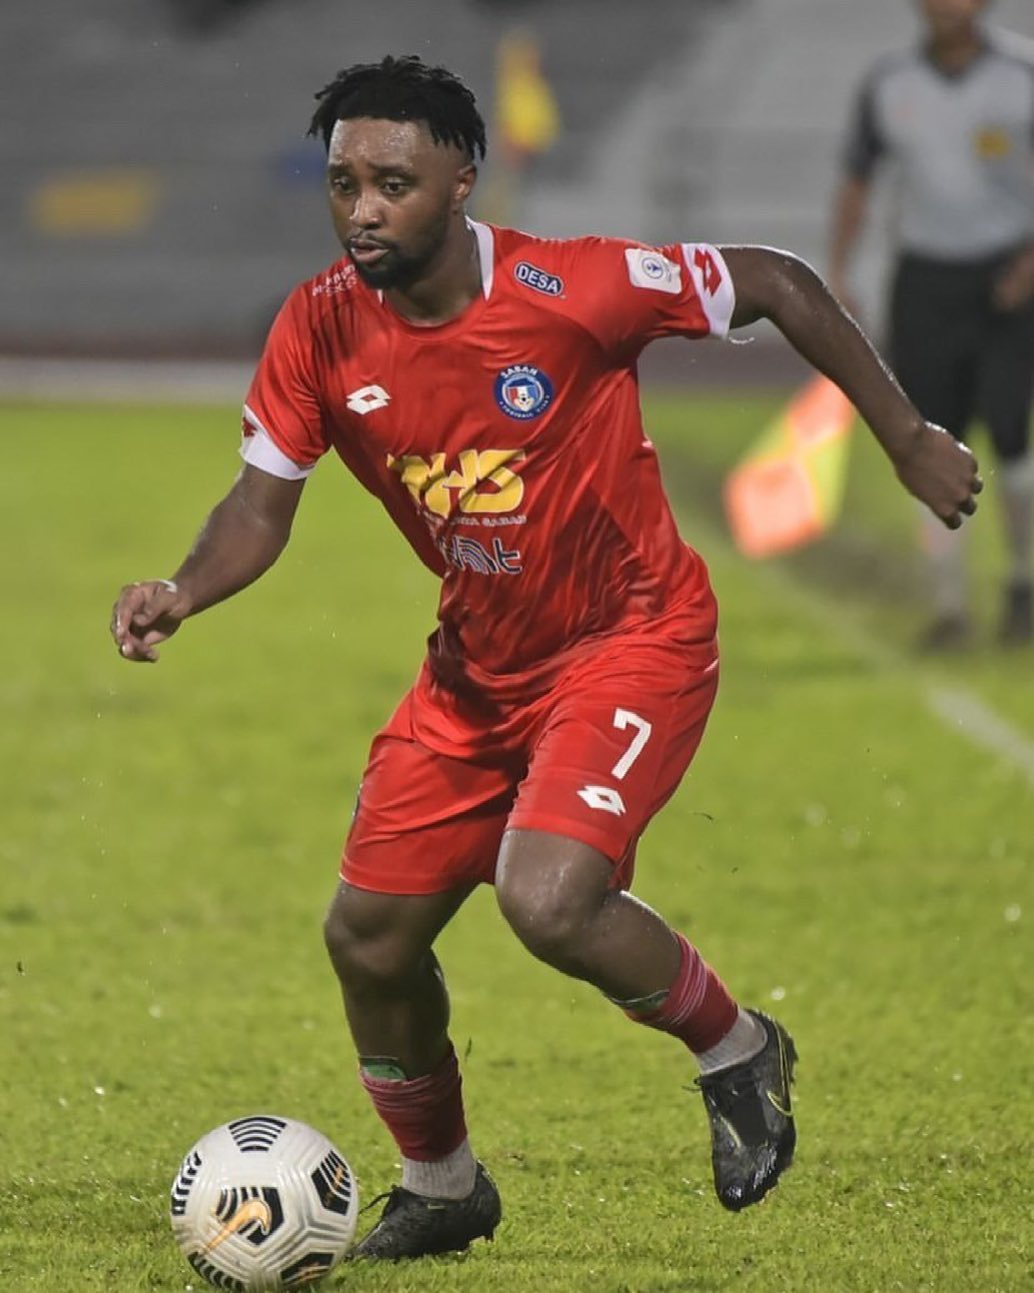 Persib Bandung Resmi Rekrut Eks Pemain Timnas Gabon Yaitu Levy Clement Madinda.